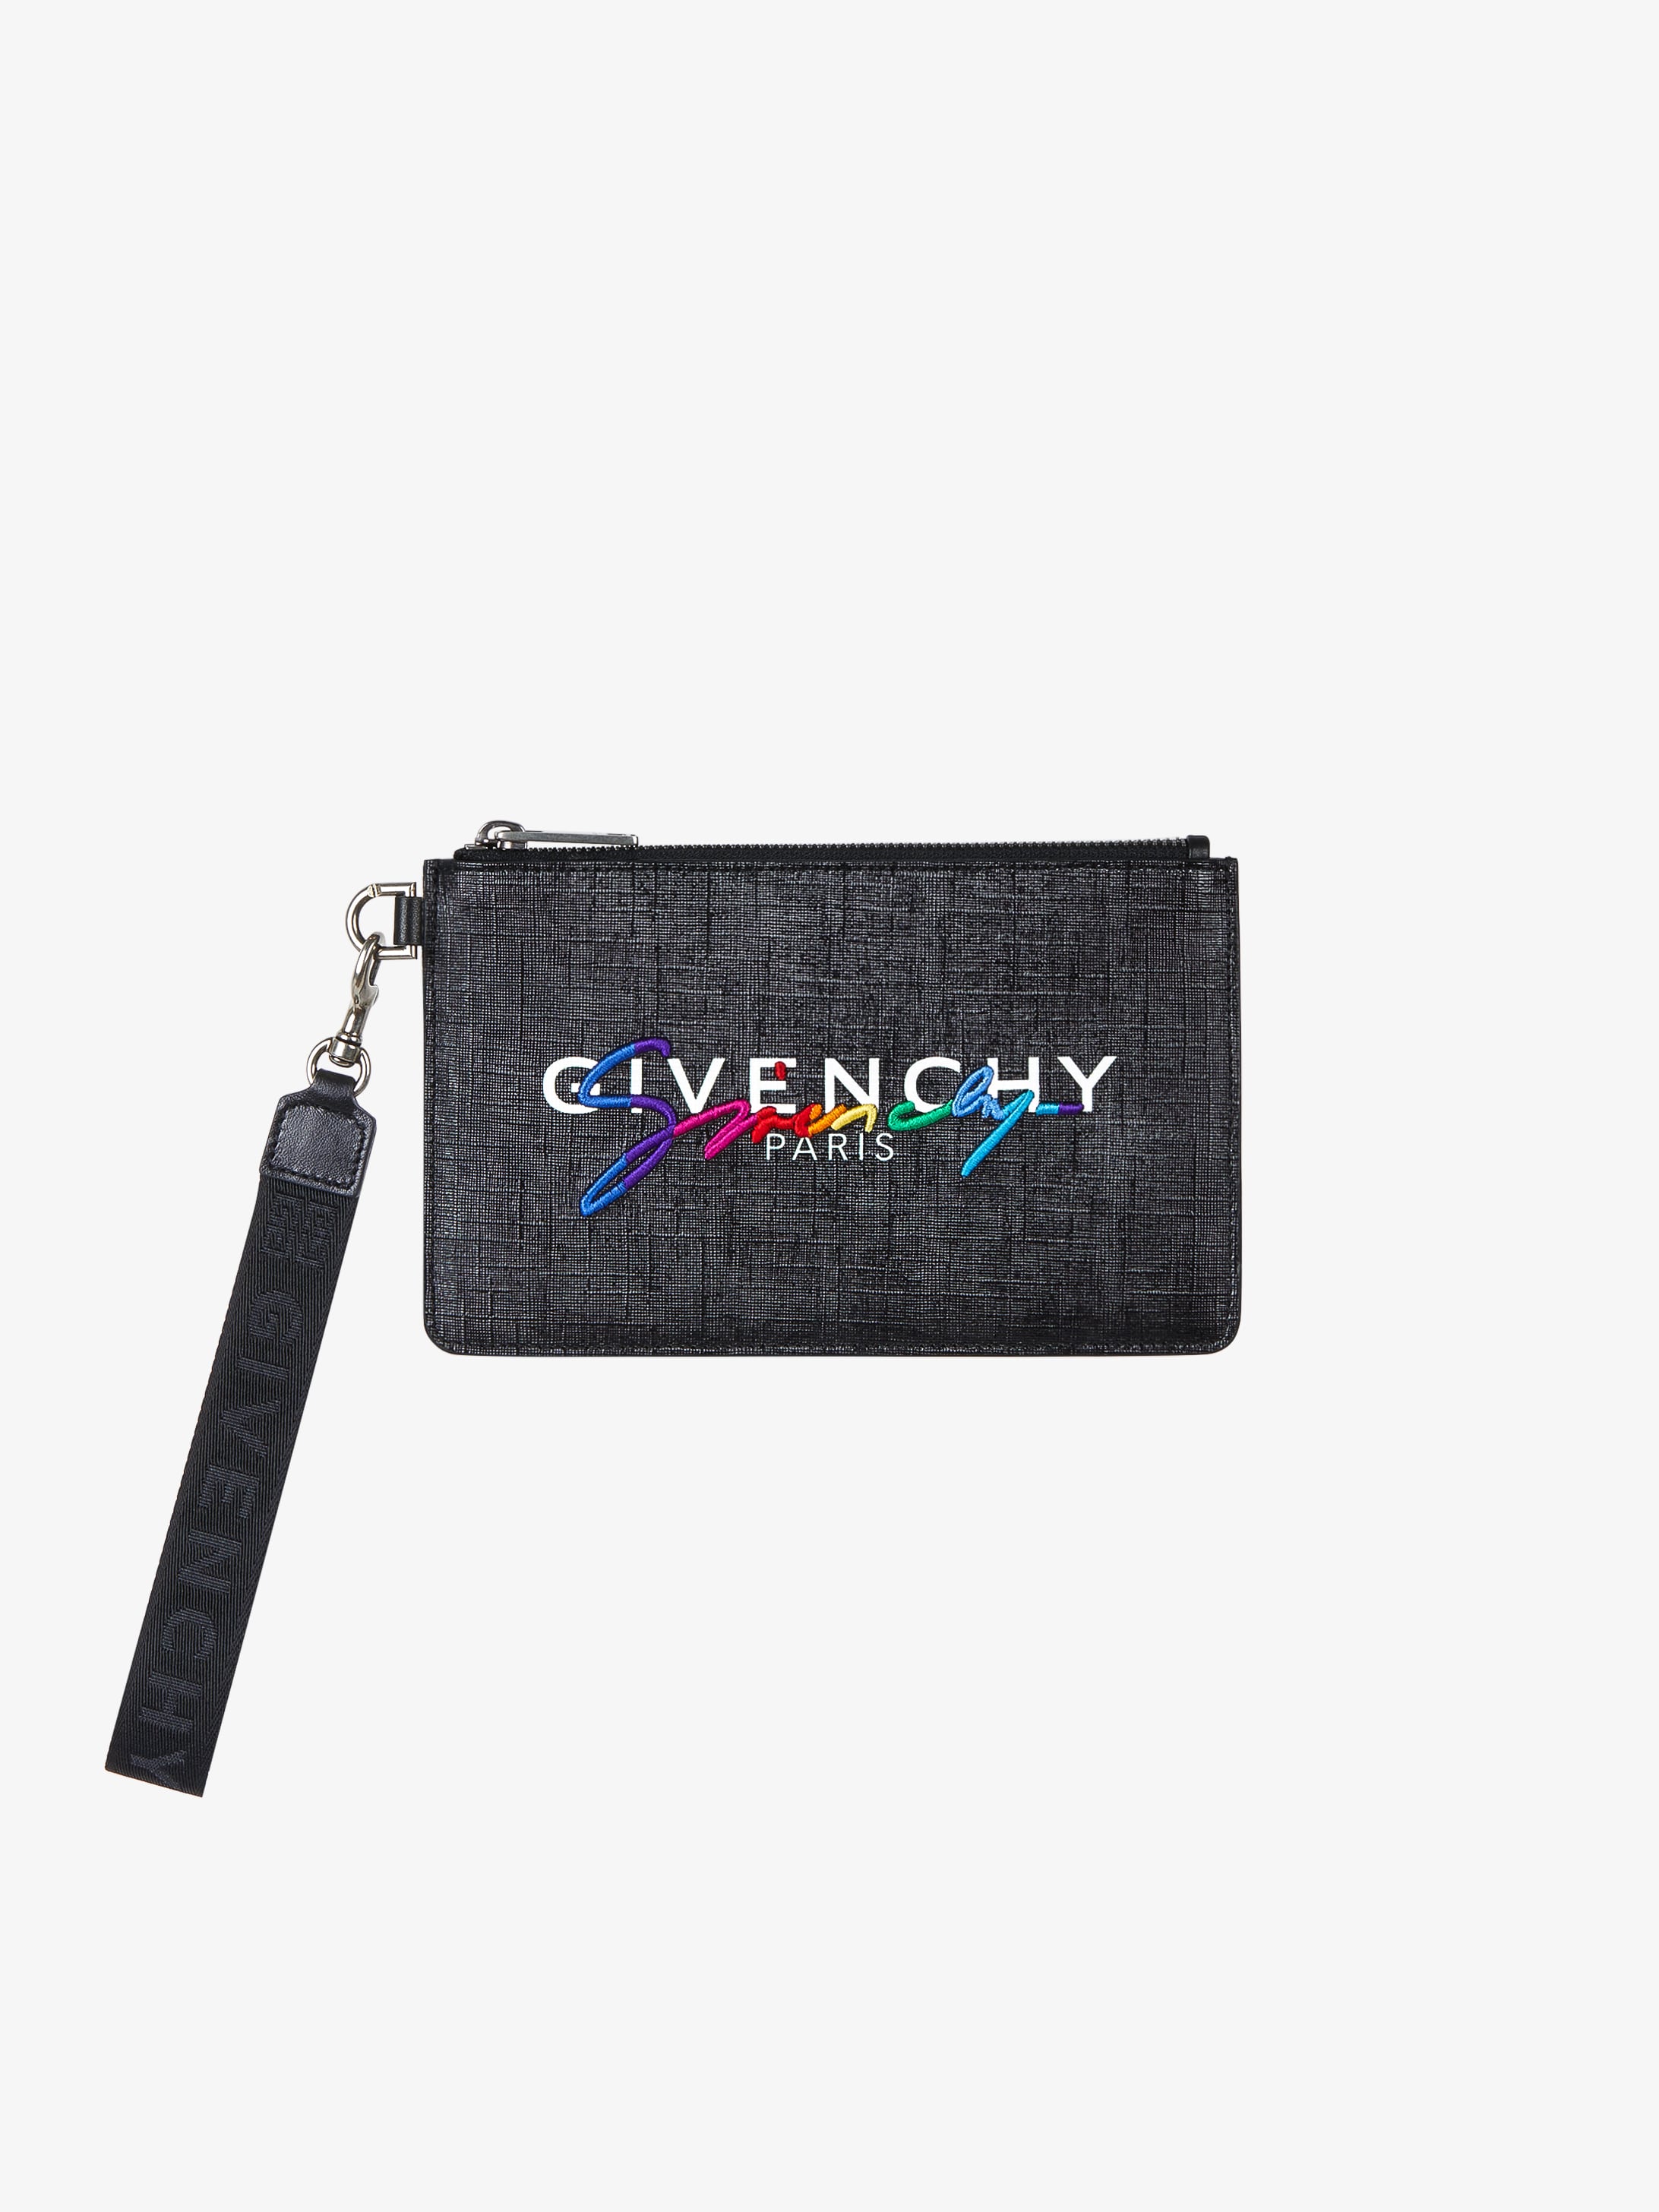 GIVENCHY wrist strap mini zipped pouch | GIVENCHY Paris